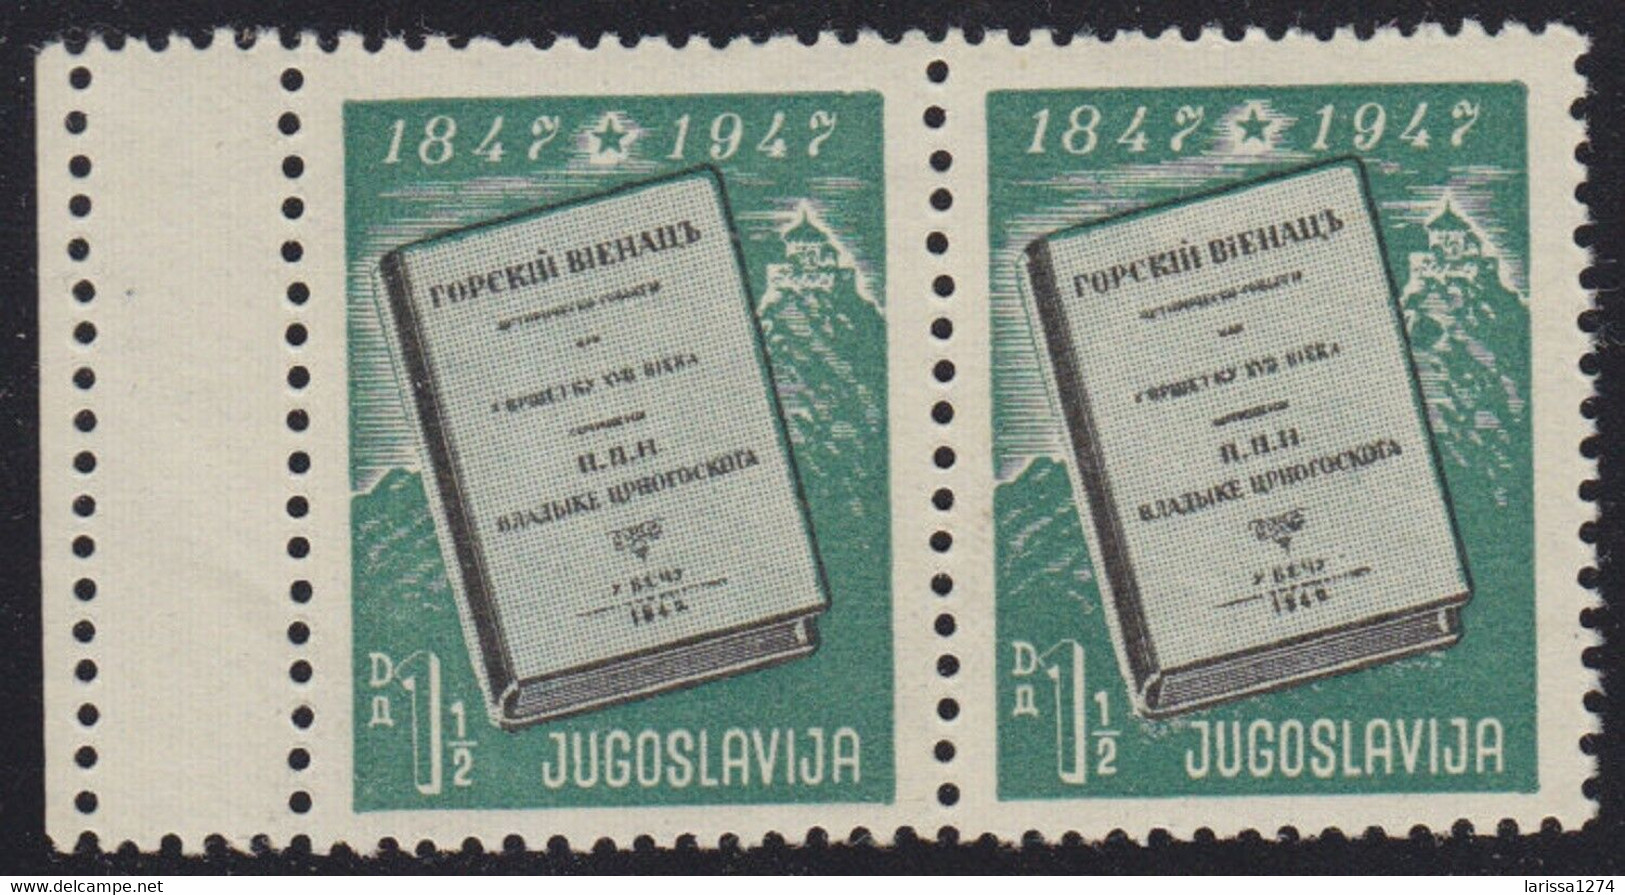 536.Yugoslavia 1947 PP Njegos ''The Mountain Wreath'' ERROR Double Perforation MNH Michel 512 - Non Dentelés, épreuves & Variétés